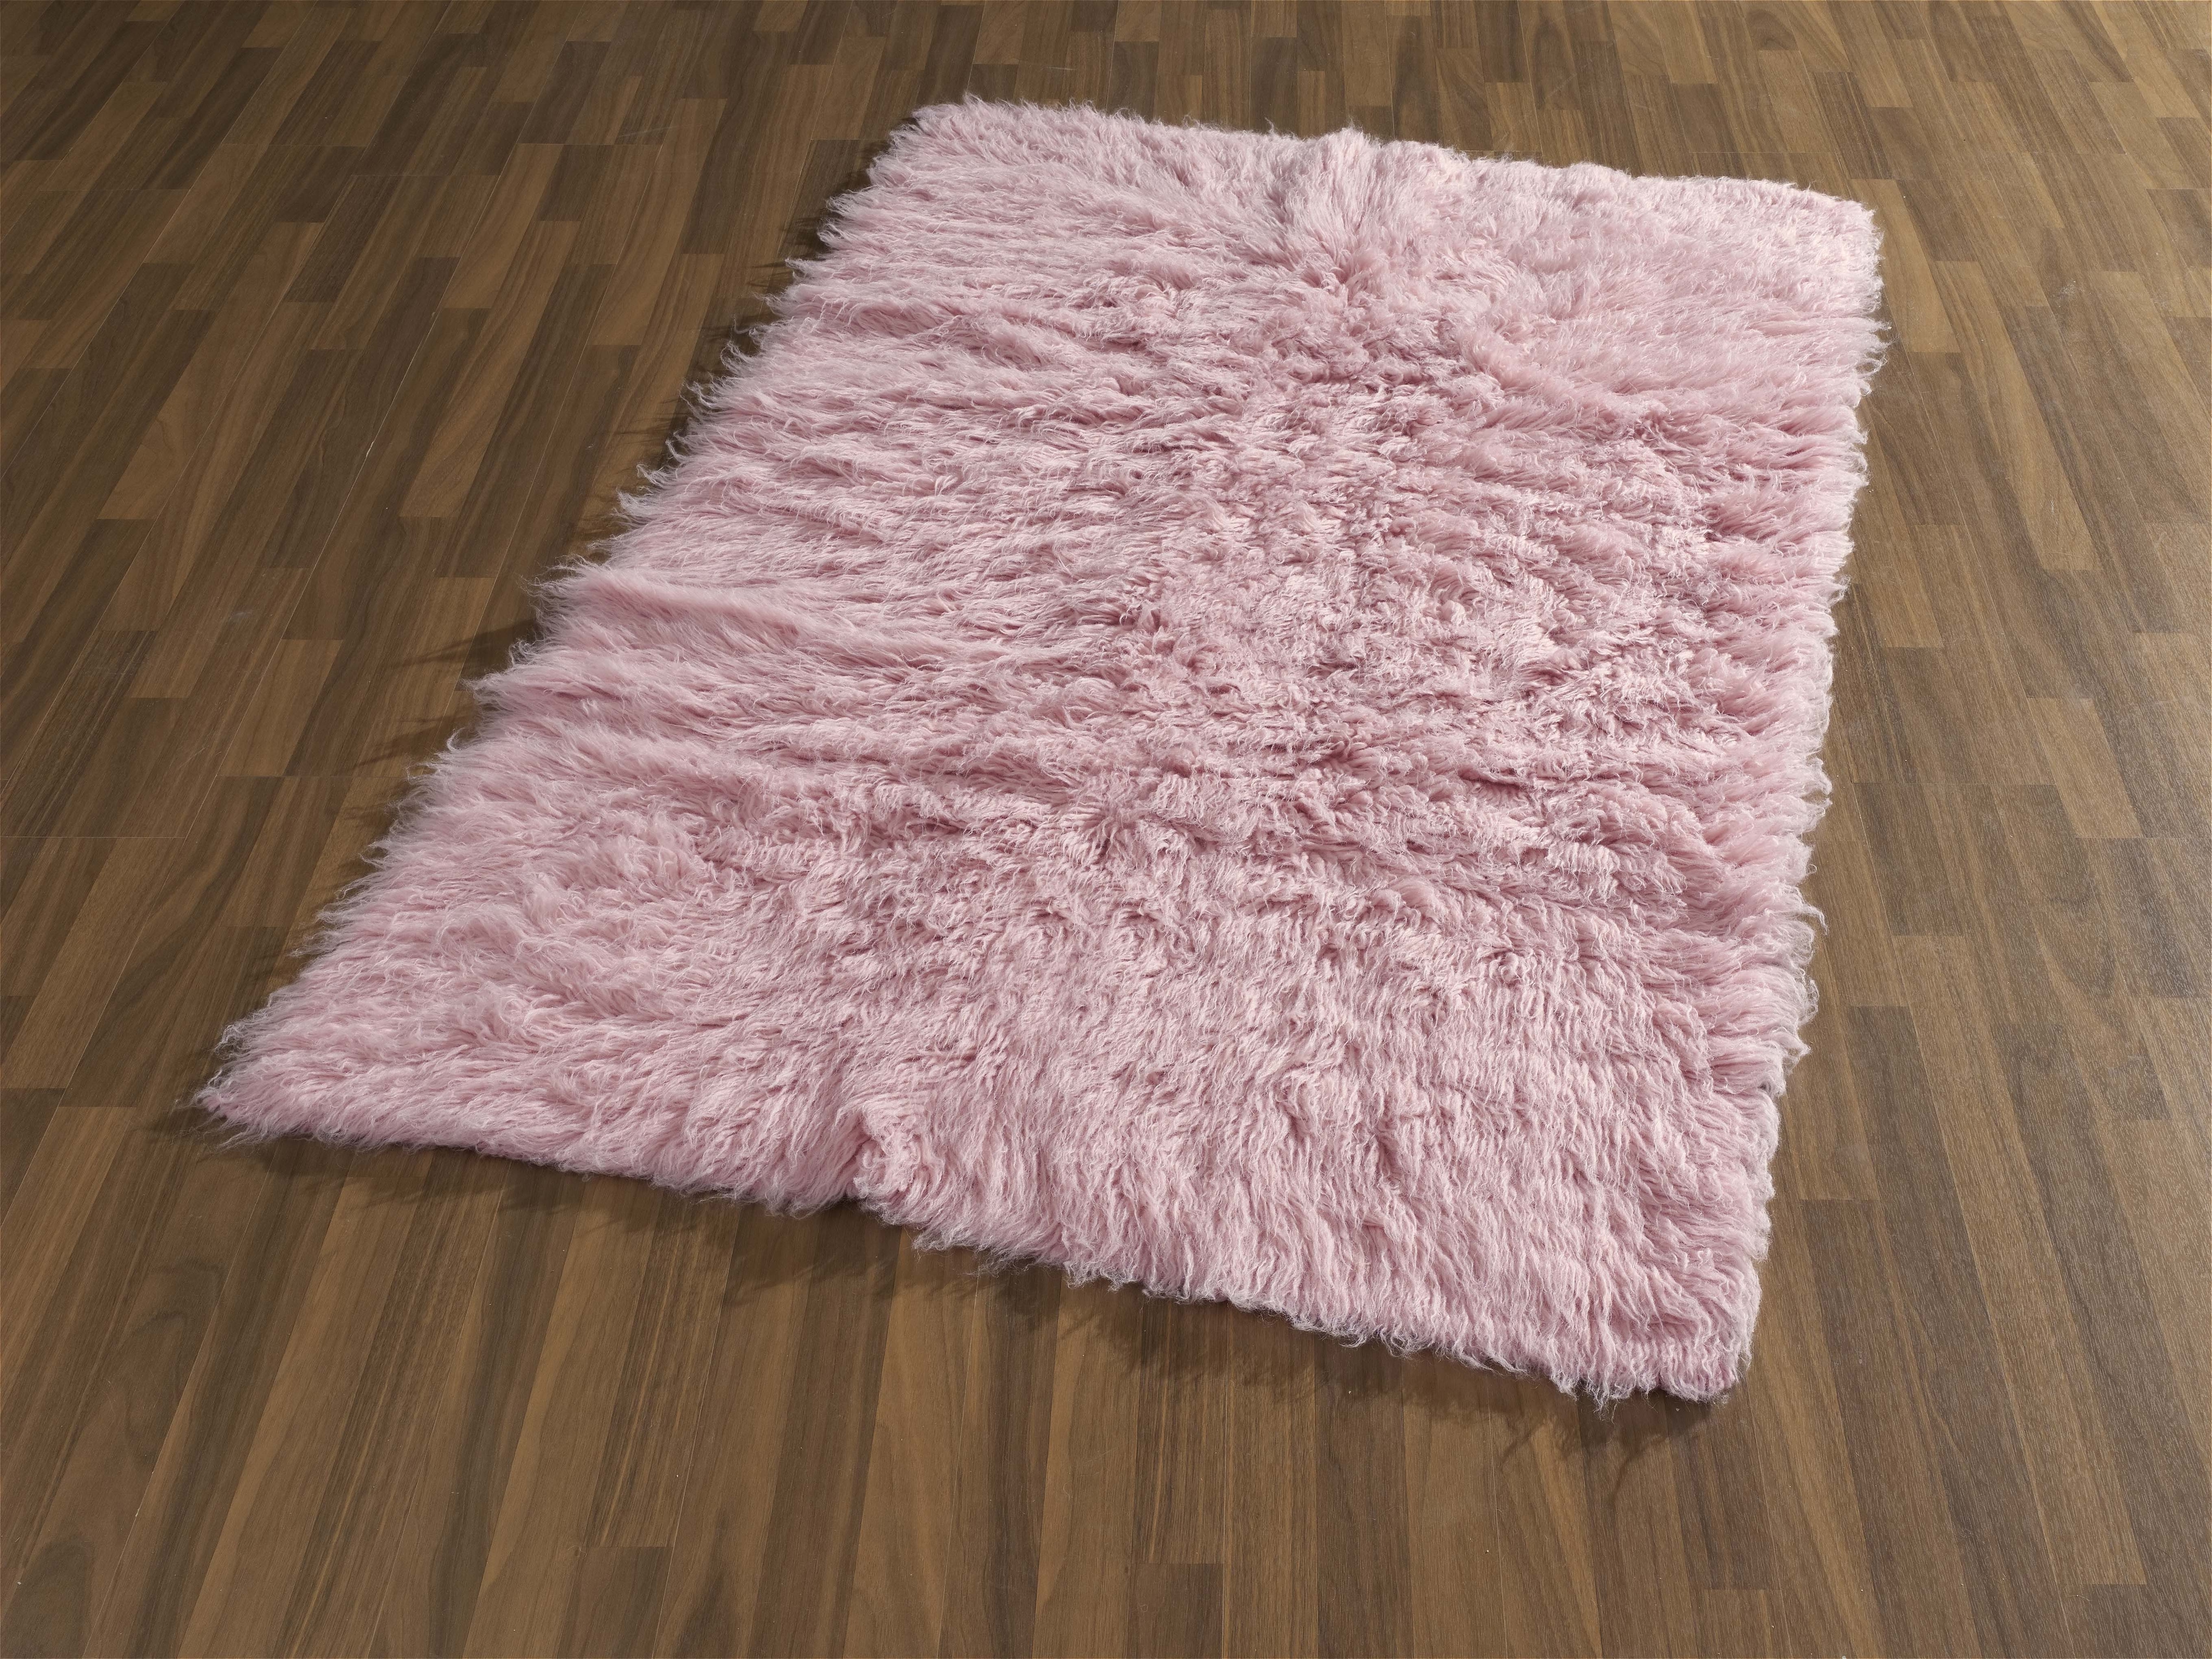 Böing Carpet Wollteppich "Flokati 1500 g", rechteckig